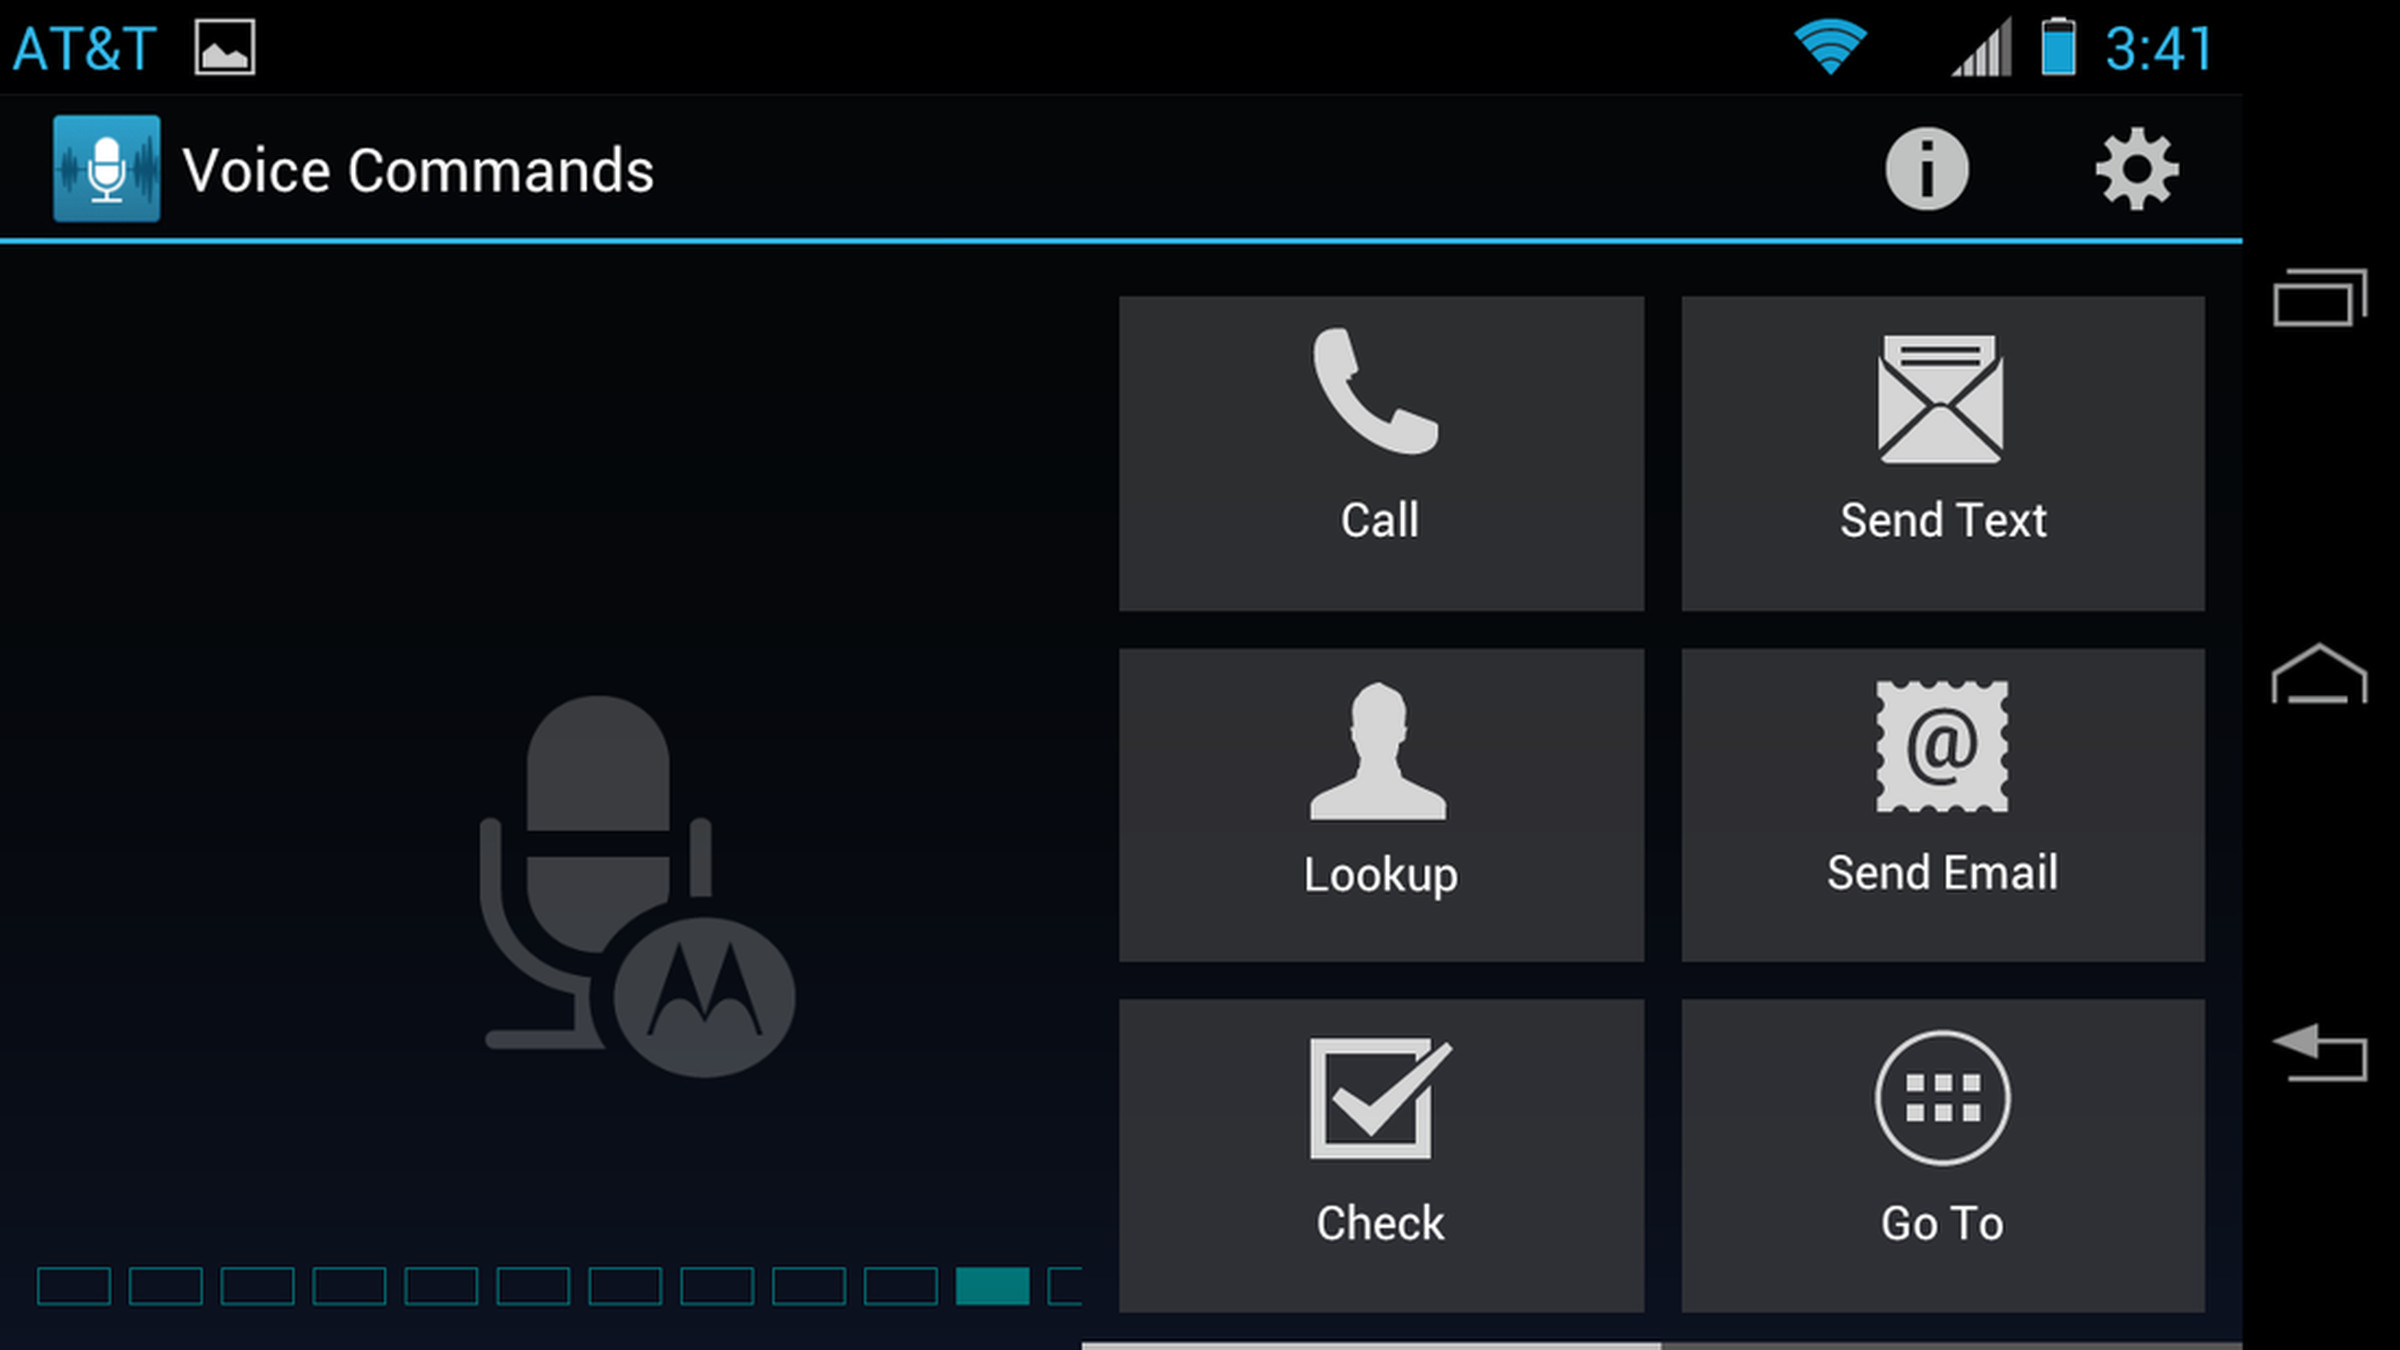 Motorola Atrix HD screenshots